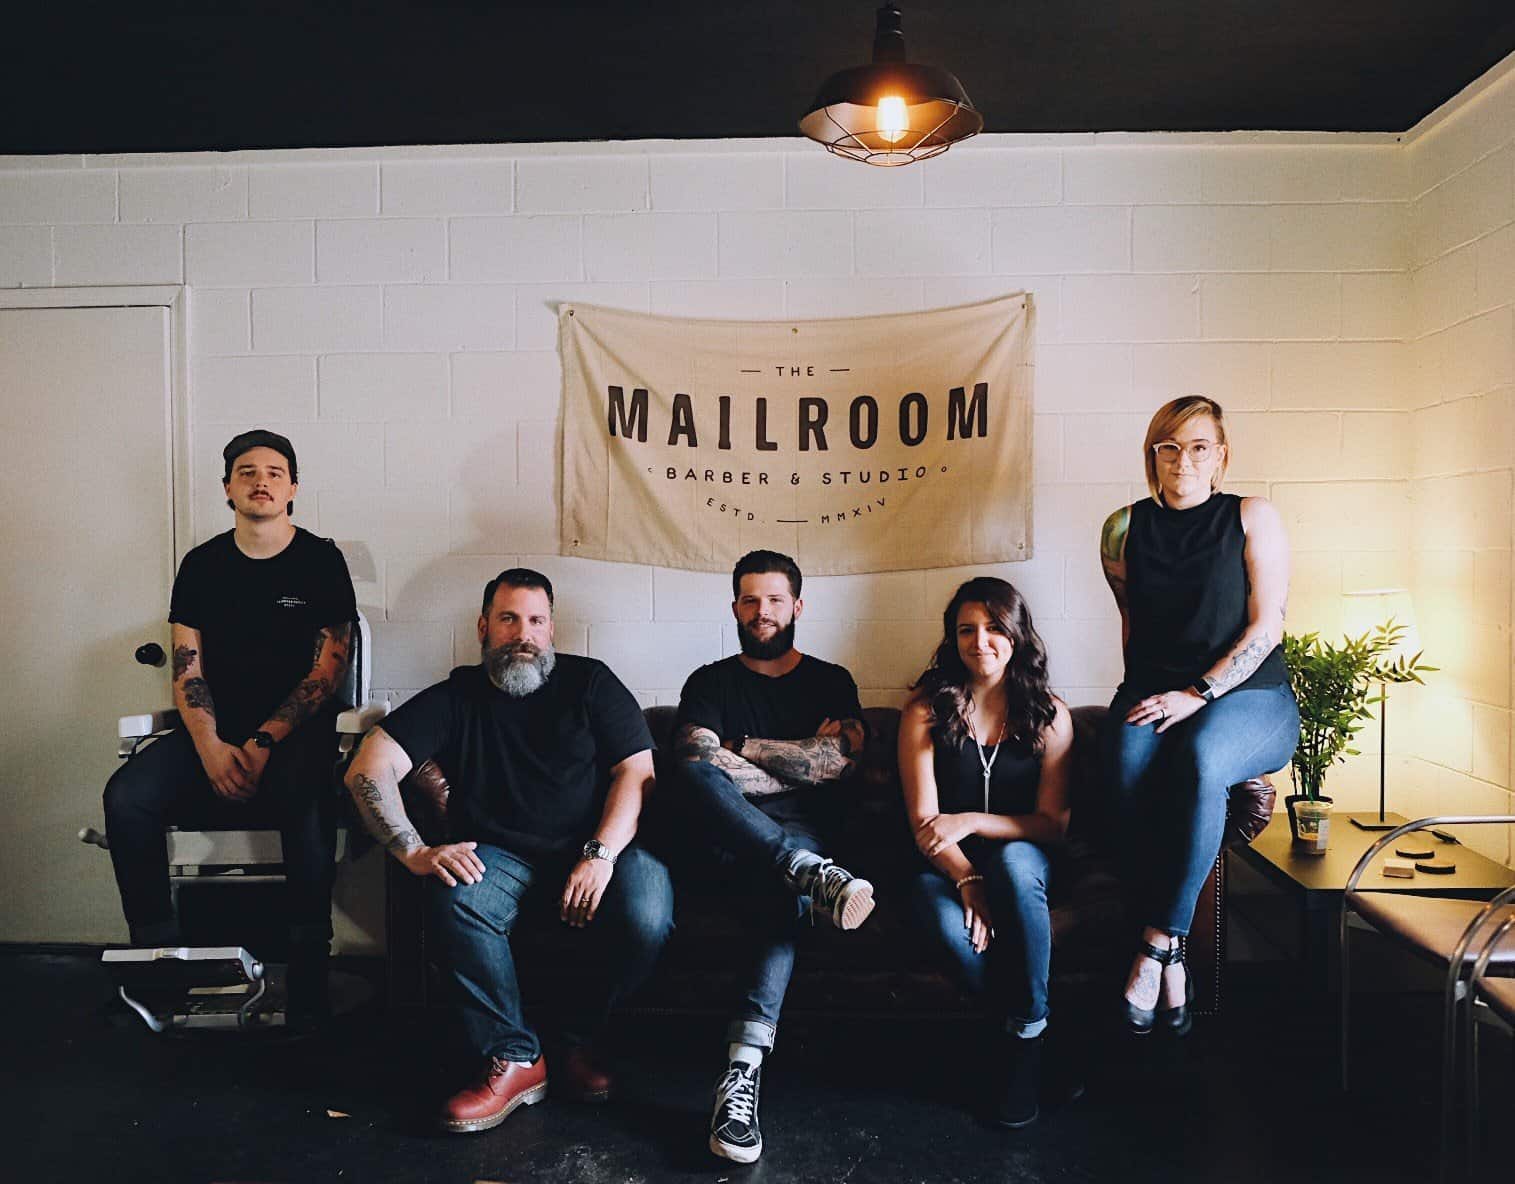 The Mailroom Barbershop and Studio Salon